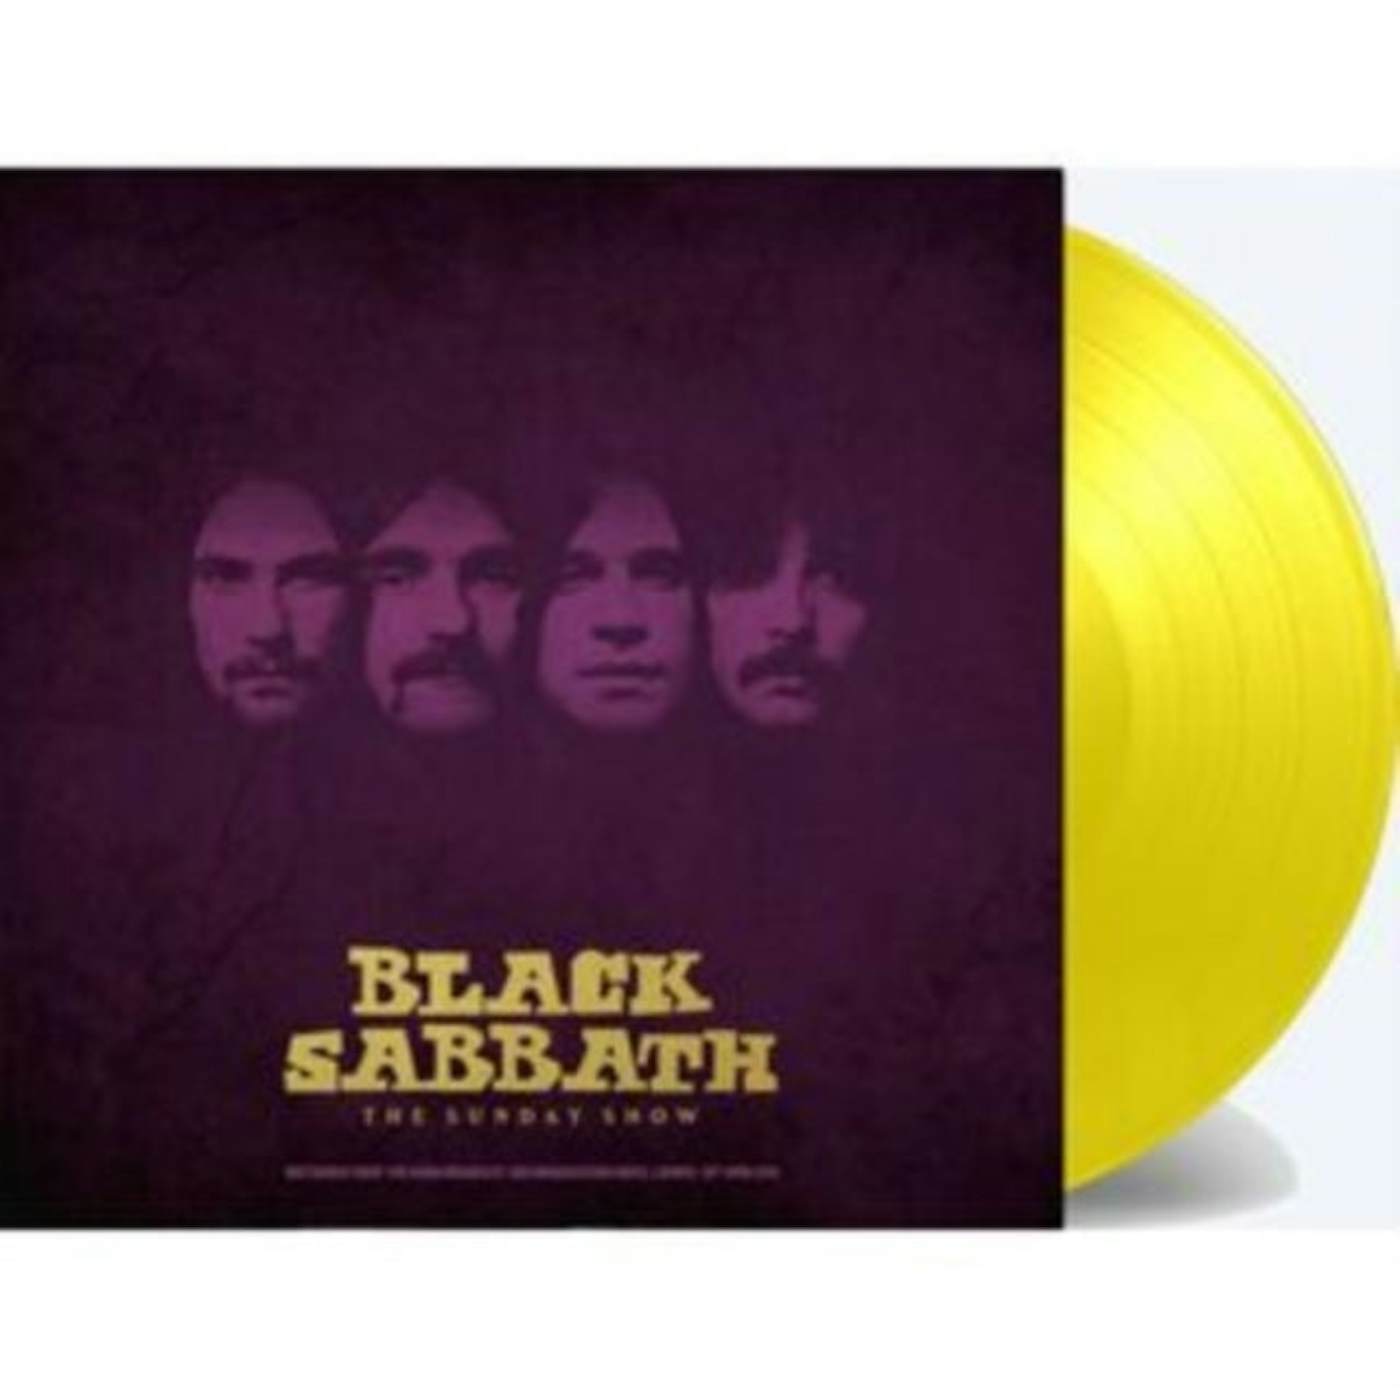 Black Sabbath LP - The Sunday Show - Bbc Broadcasting House. London (Special Edition) (Yellow Vinyl)